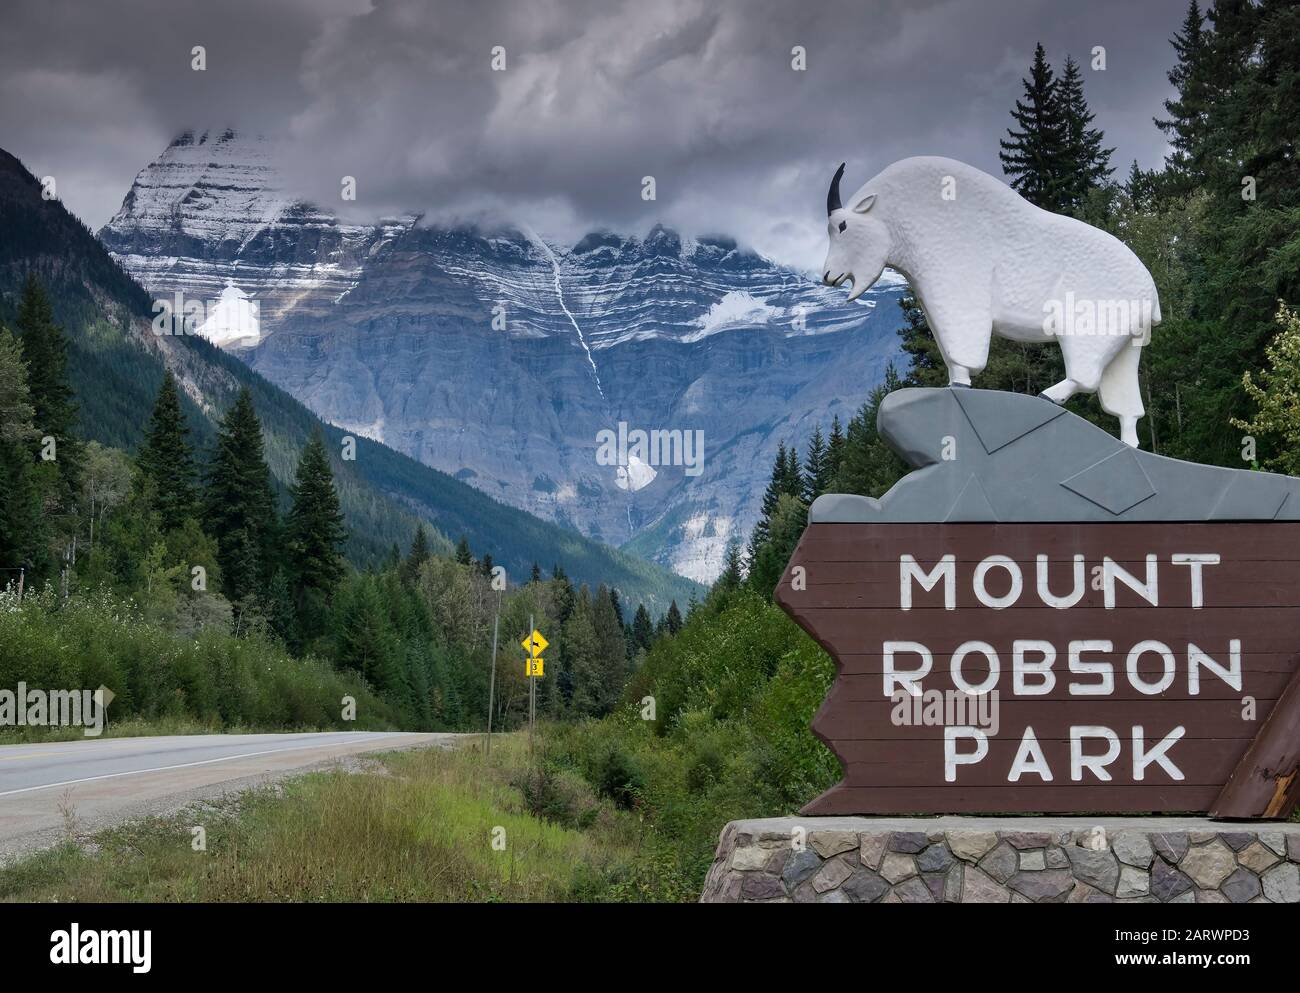 Schild Mount Robson Park mit Unterstützung von Mount Robson, Mount Robson Provincial Park, Canadian Rockies, British Columbia, Kanada Stockfoto